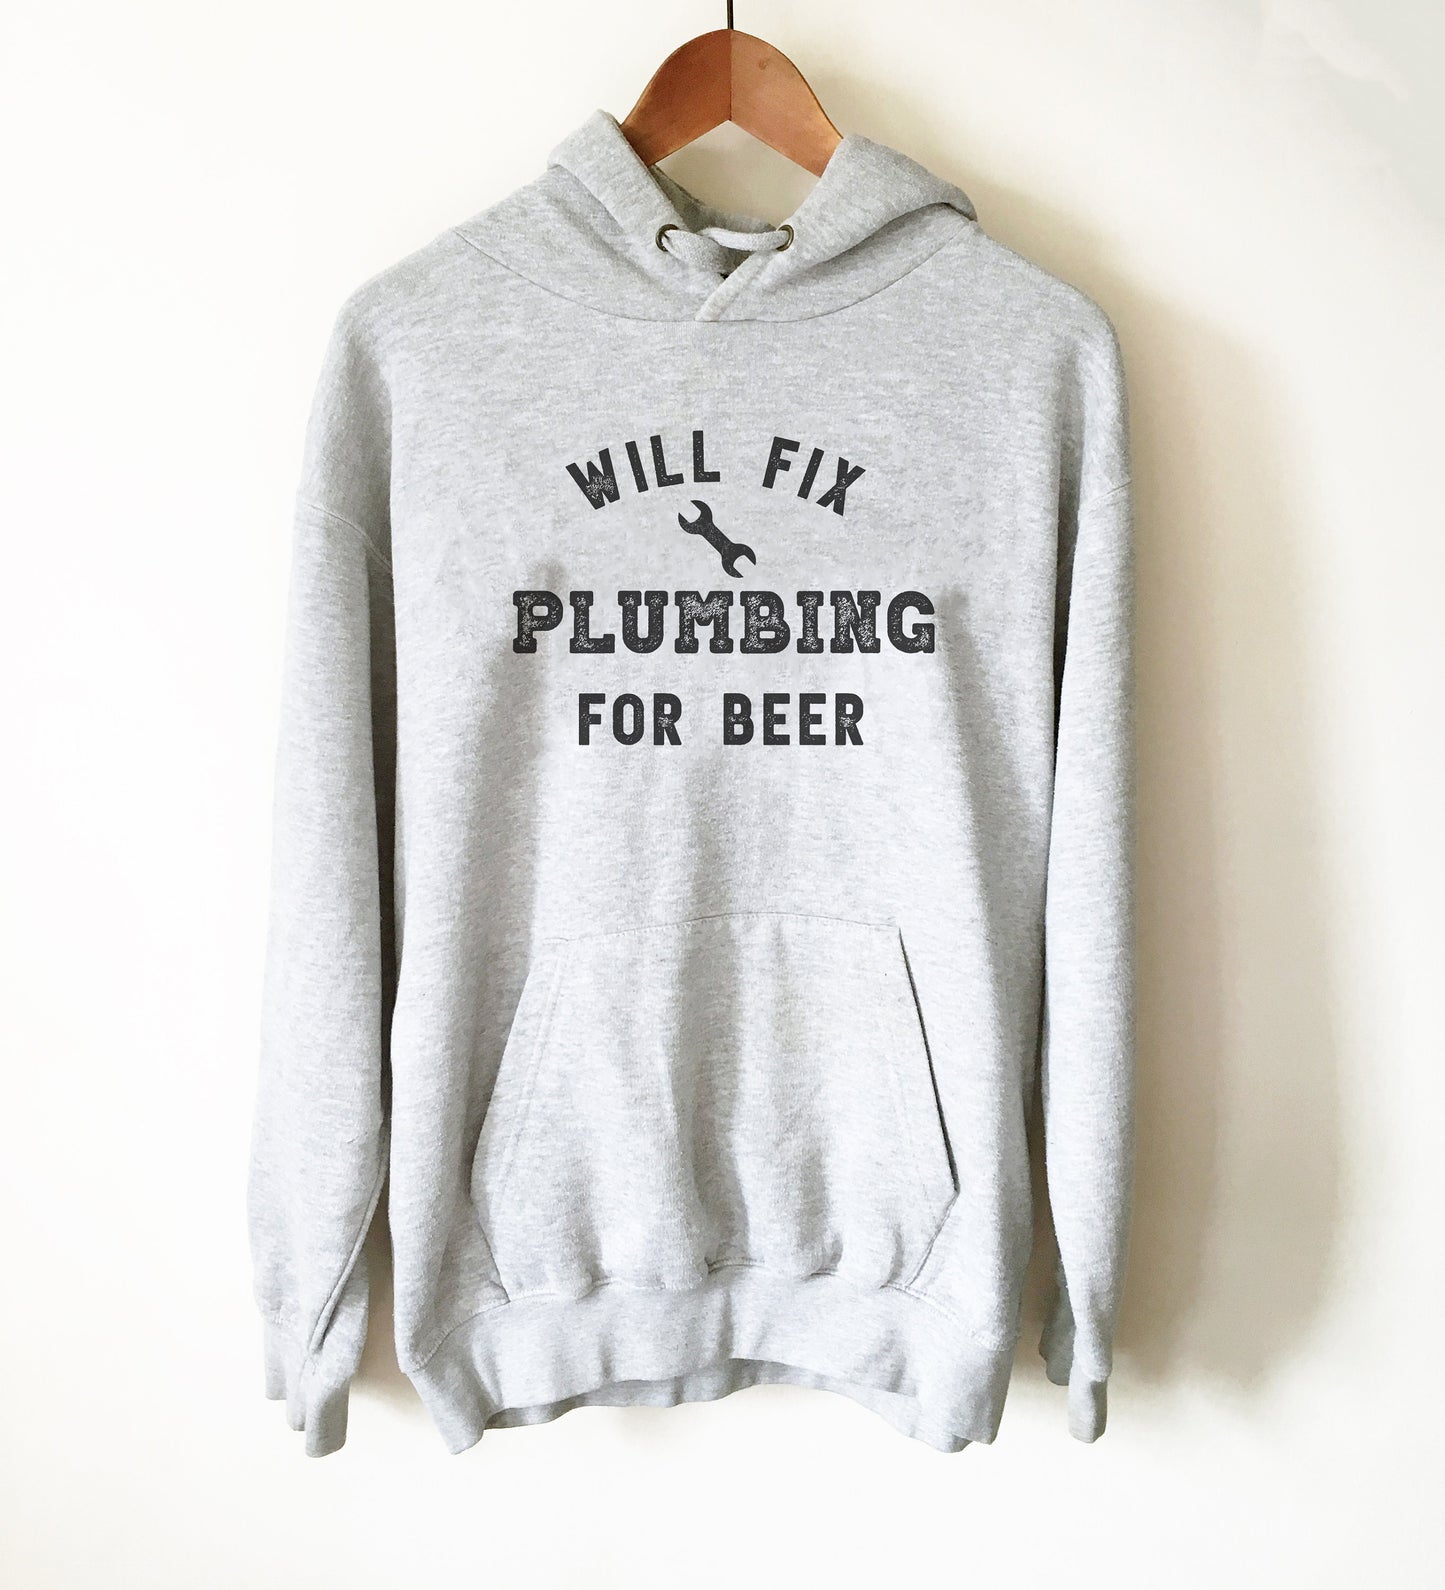 Will Fix Plumbing For Beer Hoodie - Plumber, Plumber T-Shirt, Plumbing Shirt, Plumber Gift, Fathers Day Gift, Gift For Dad, Beer Shirt